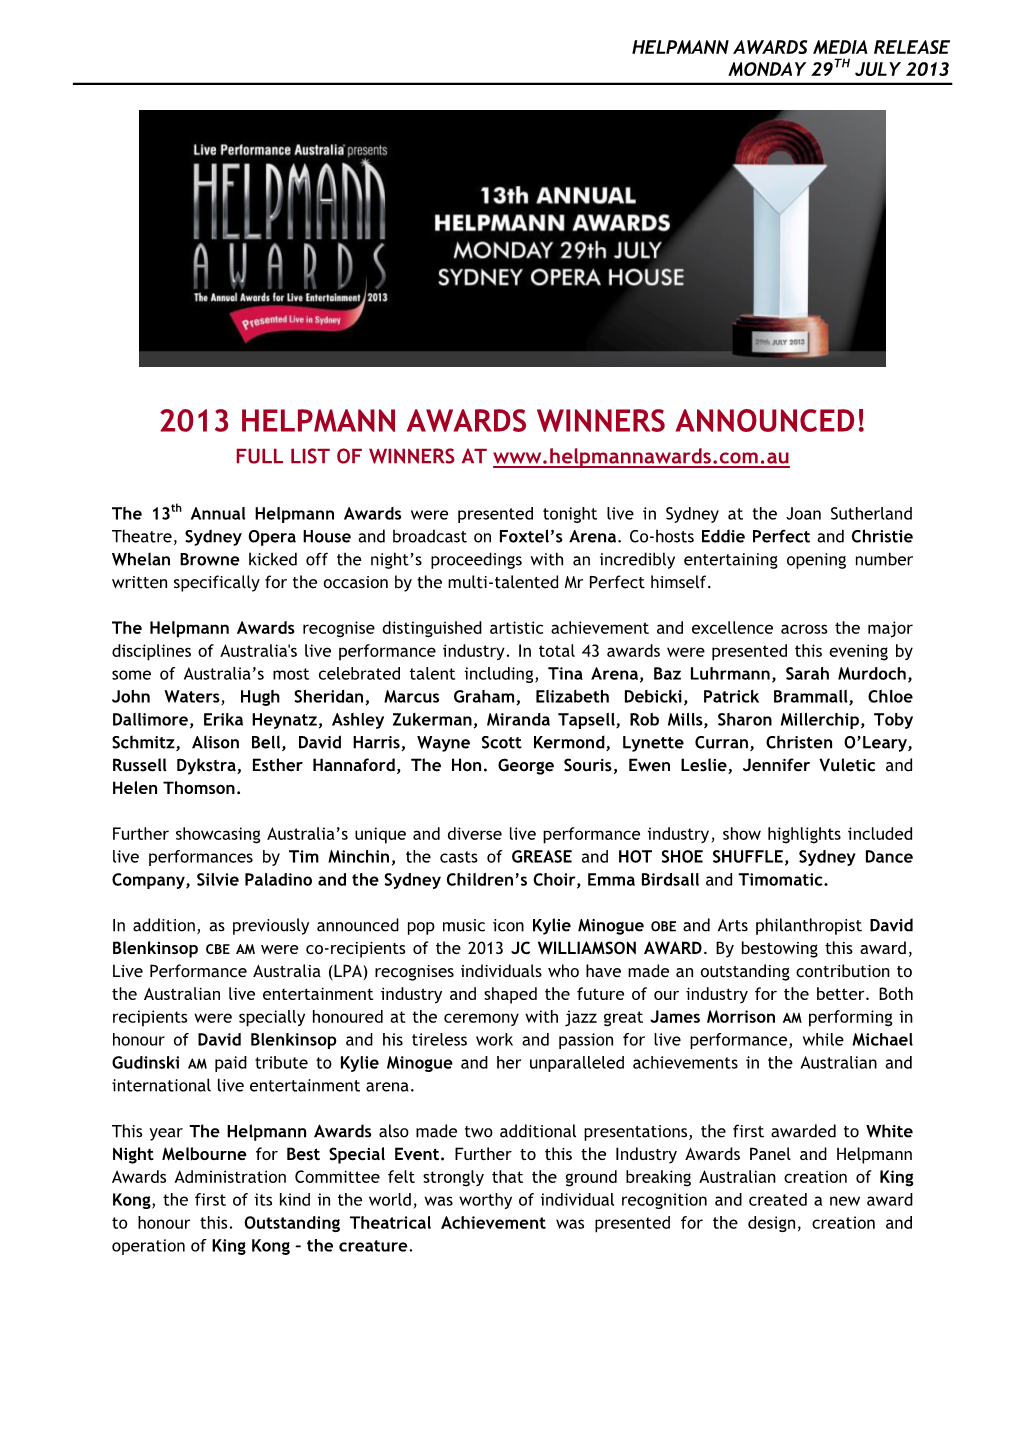 2013 Helpmann Awards Winners Announced! Full List of Winners At